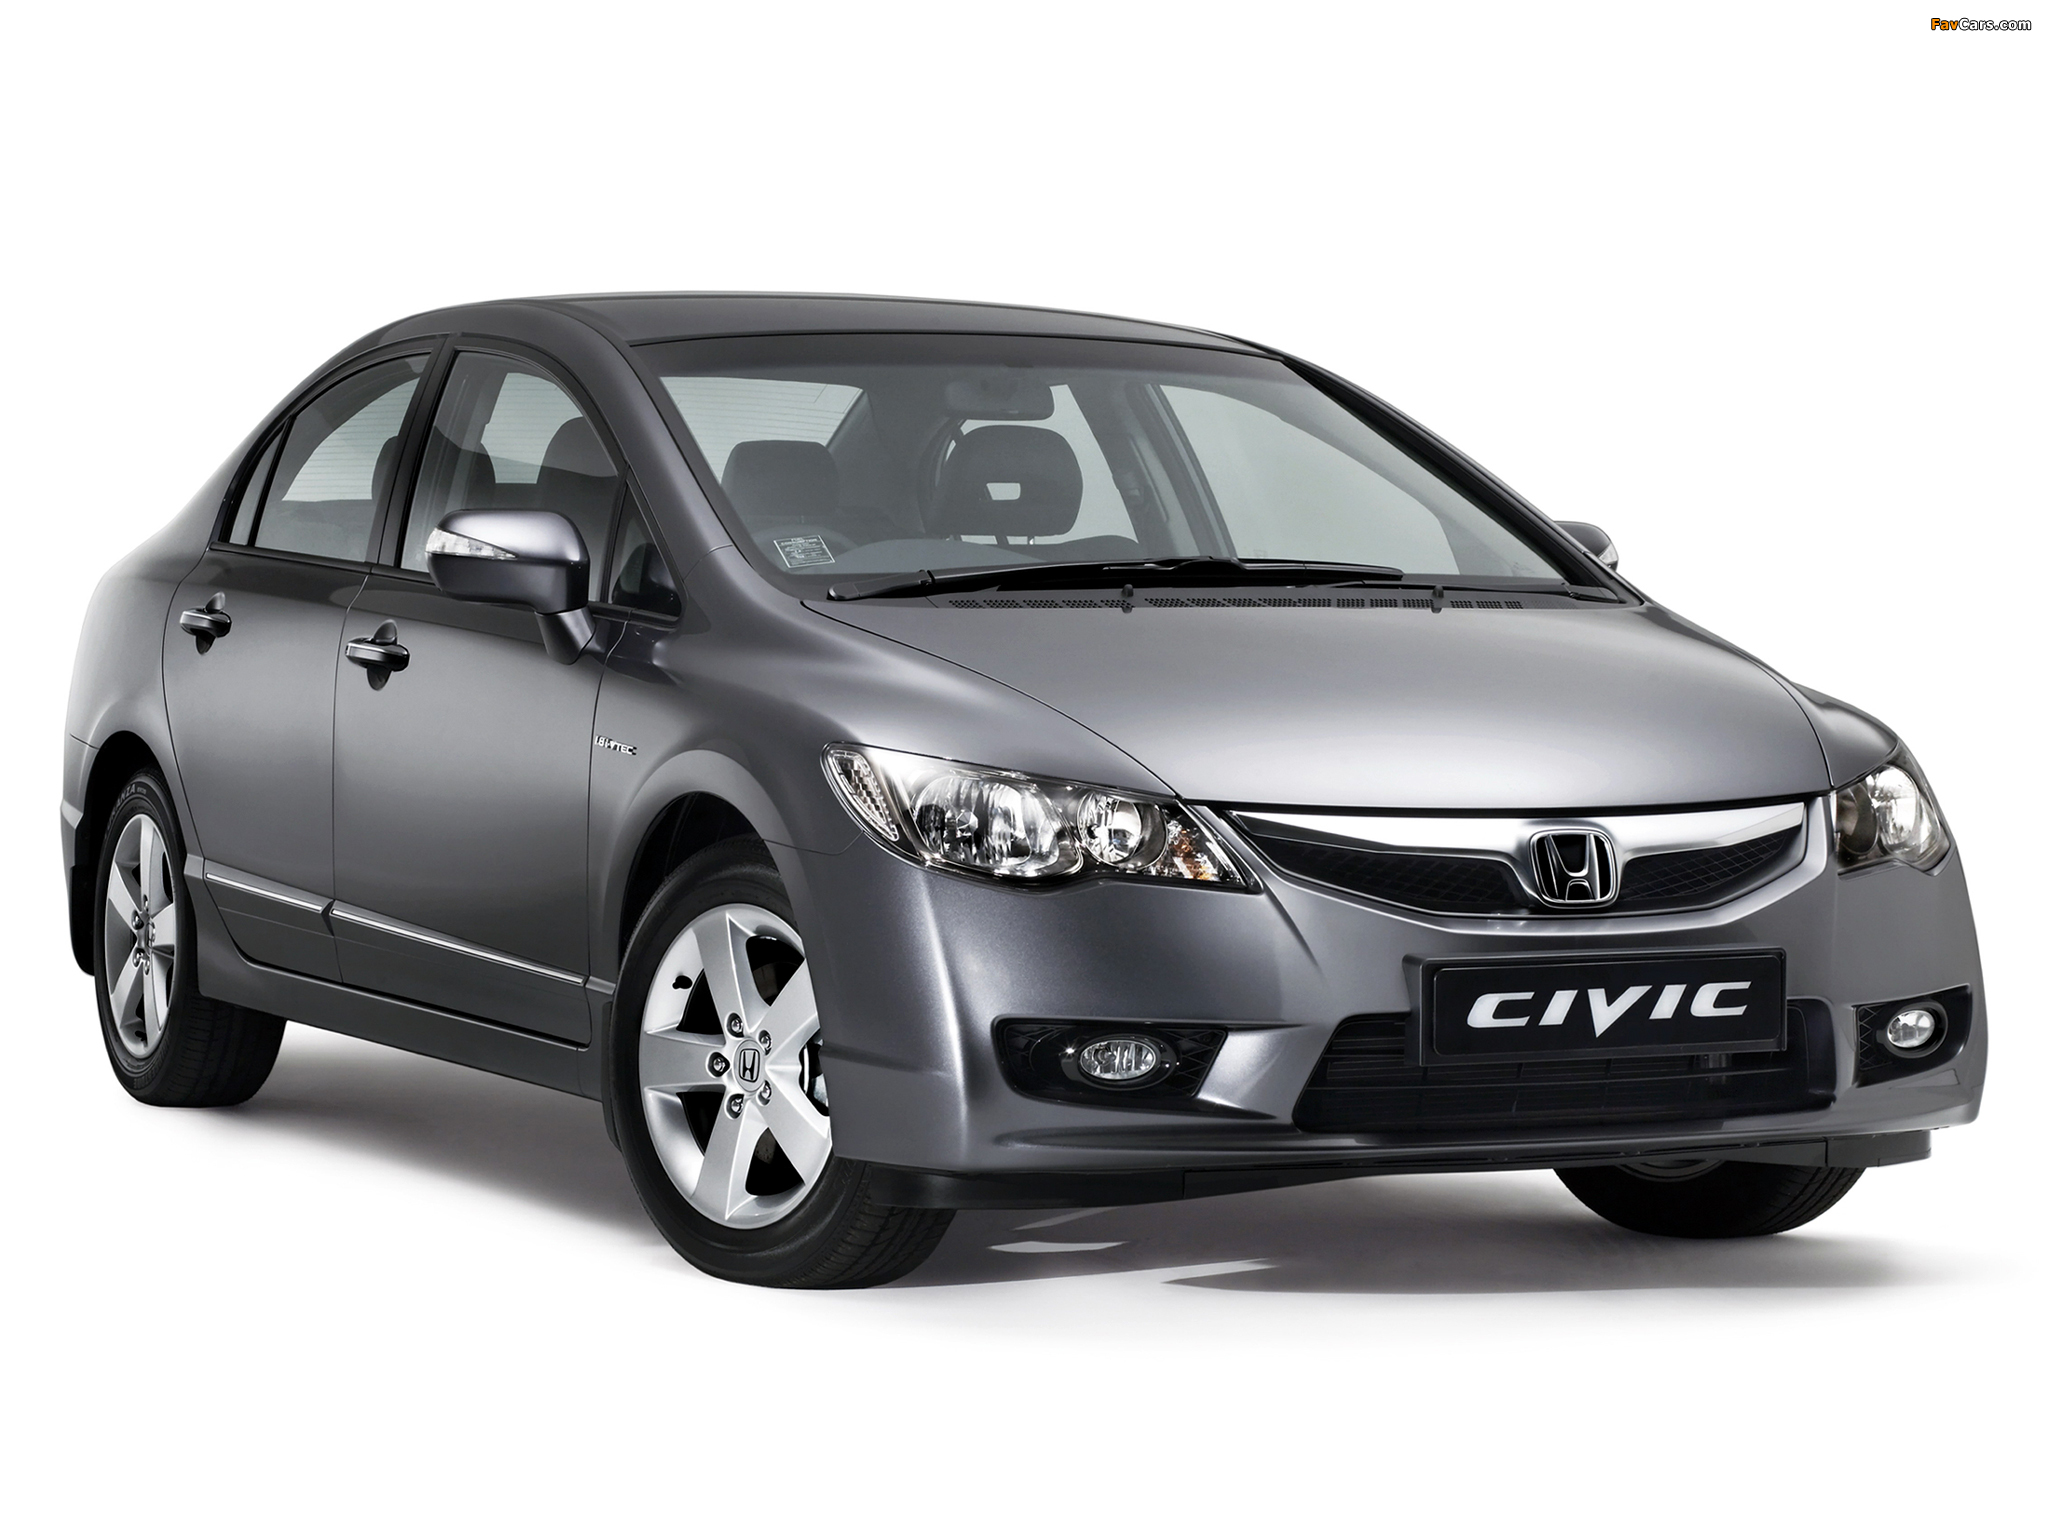 Honda Civic Sedan ZA-spec (FD) 2008 images (2048x1536)